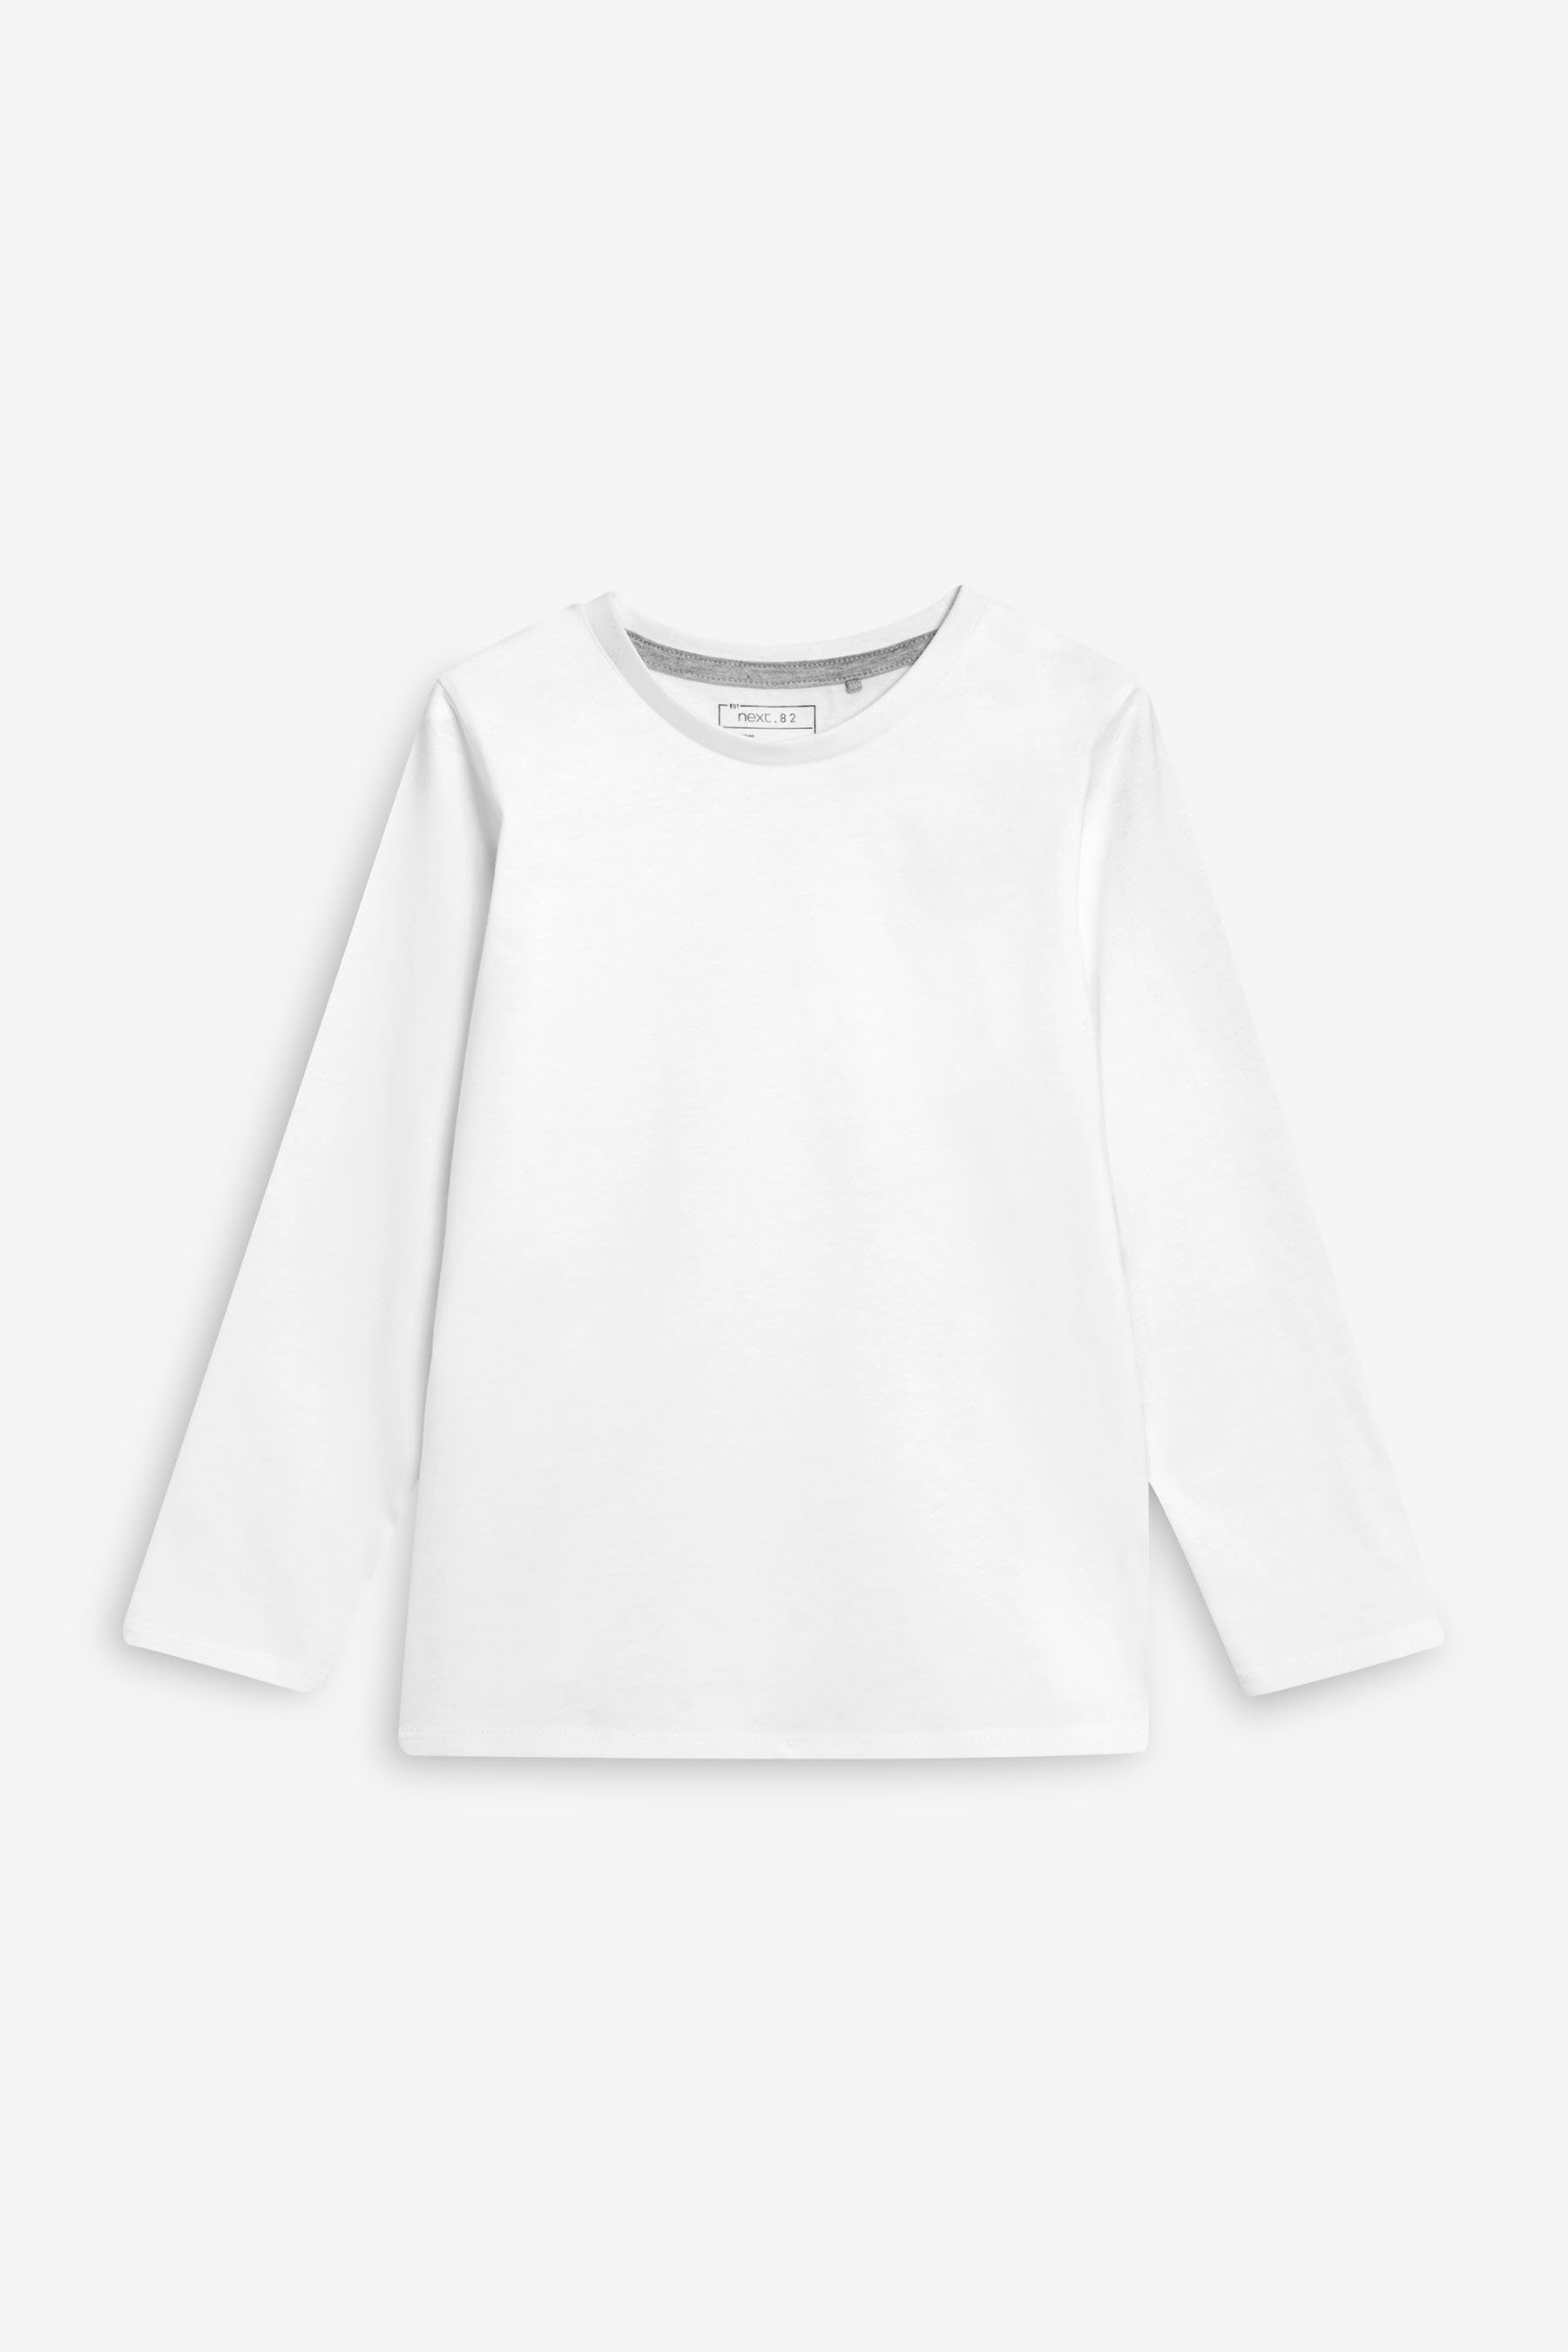 T-Shirt Next White 2er-Pack (2-tlg) Shirts,